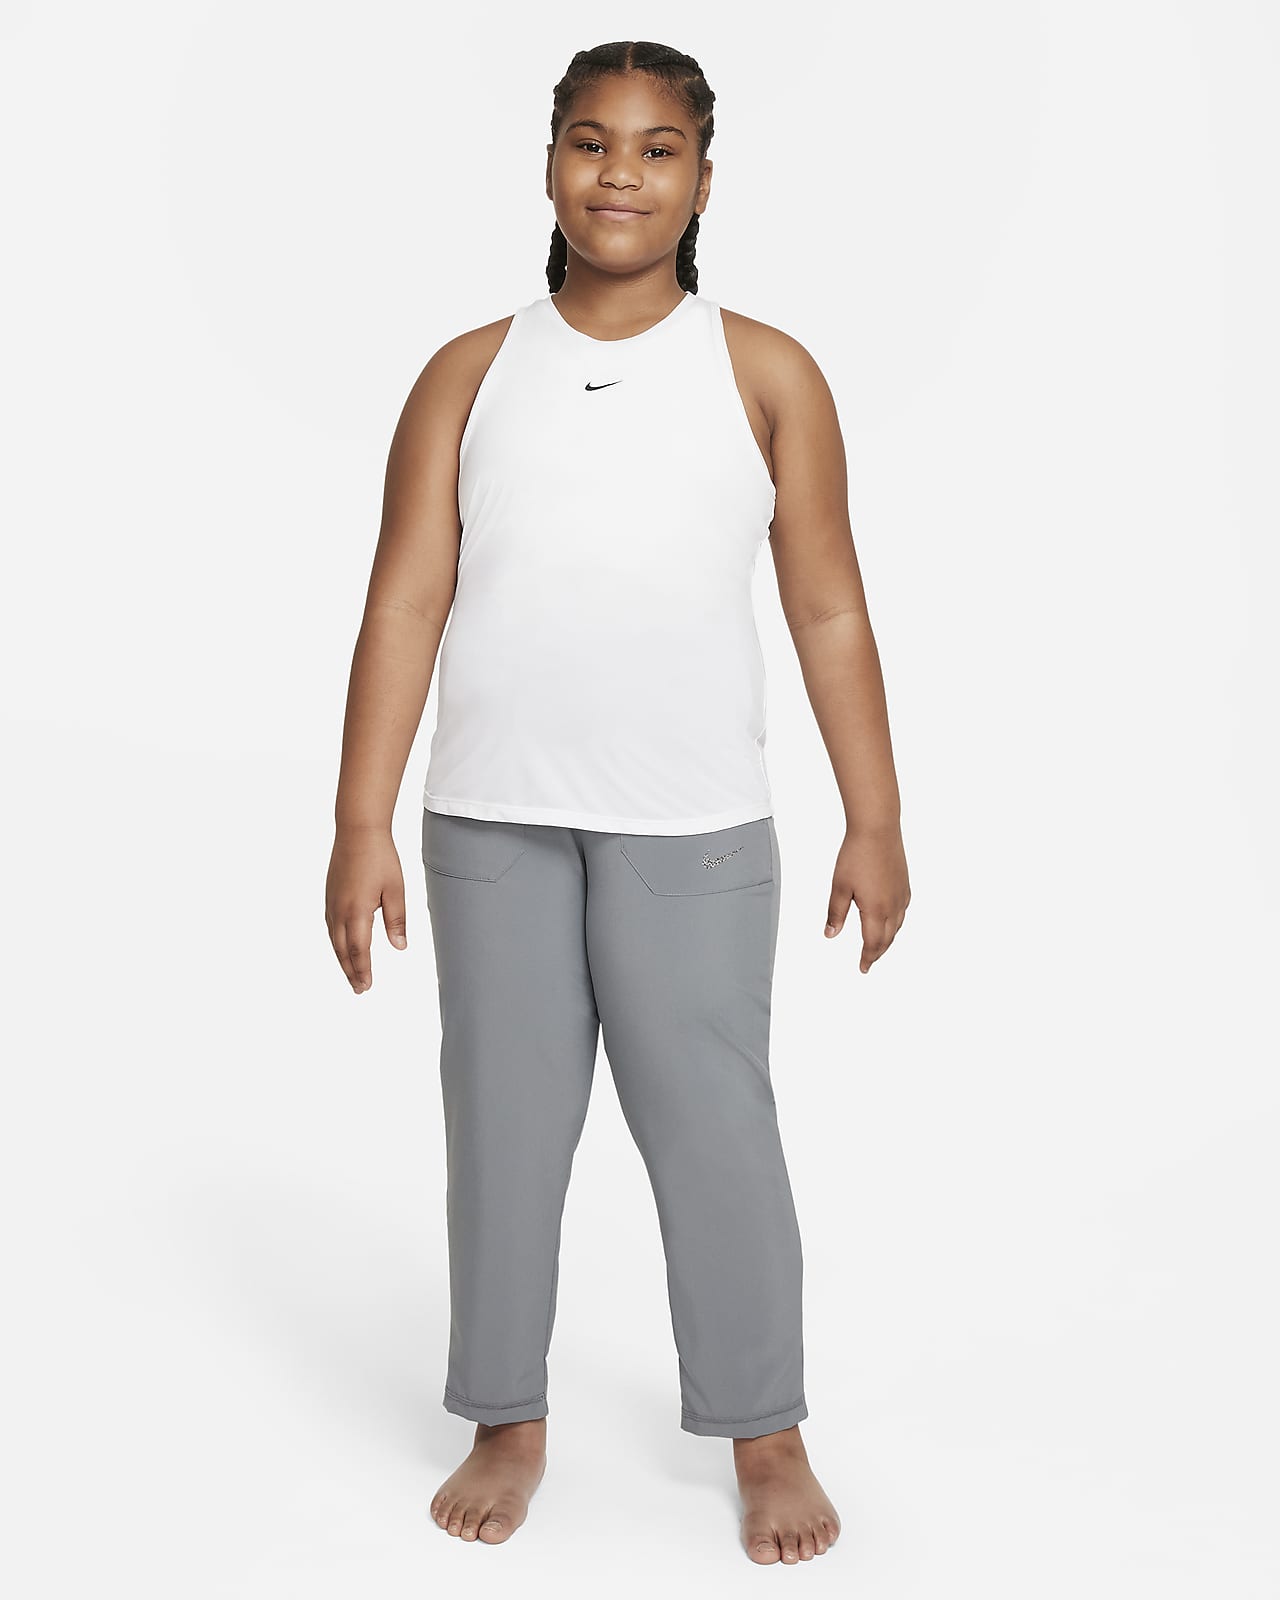 Nike Dry Girls Pink Dri-fit Athletic Leggings Stretch Sweats Yoga